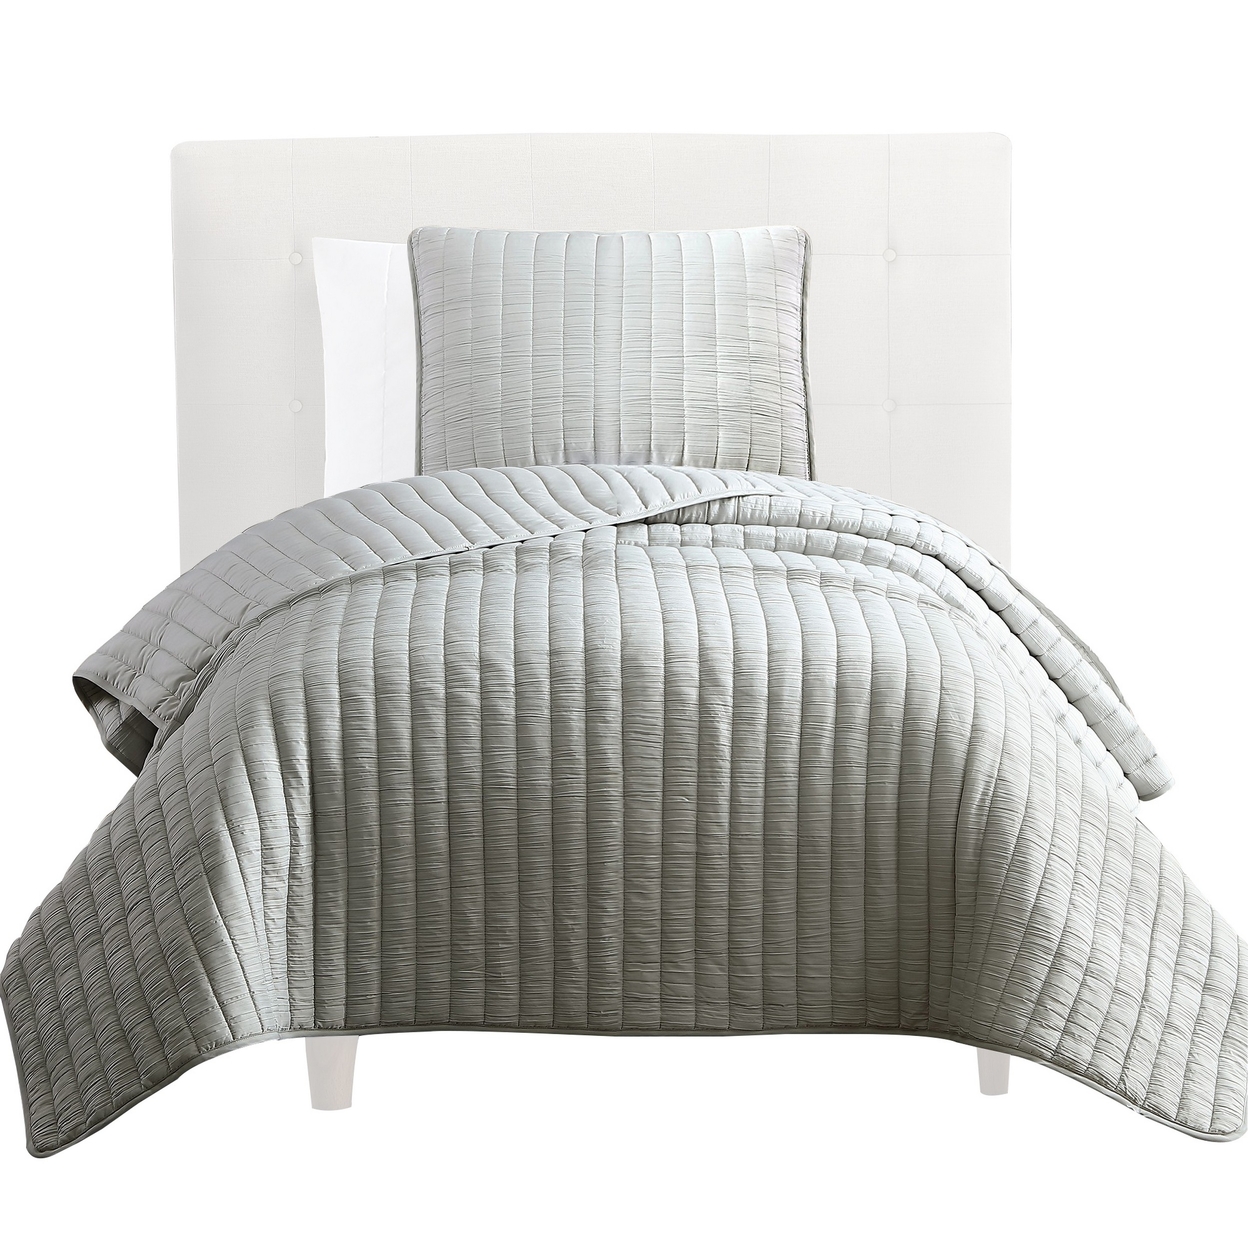 Elia Twin Size Contemporary Quilt Coverlet Set, Crinkle Texture, Light Gray - Saltoro Sherpi